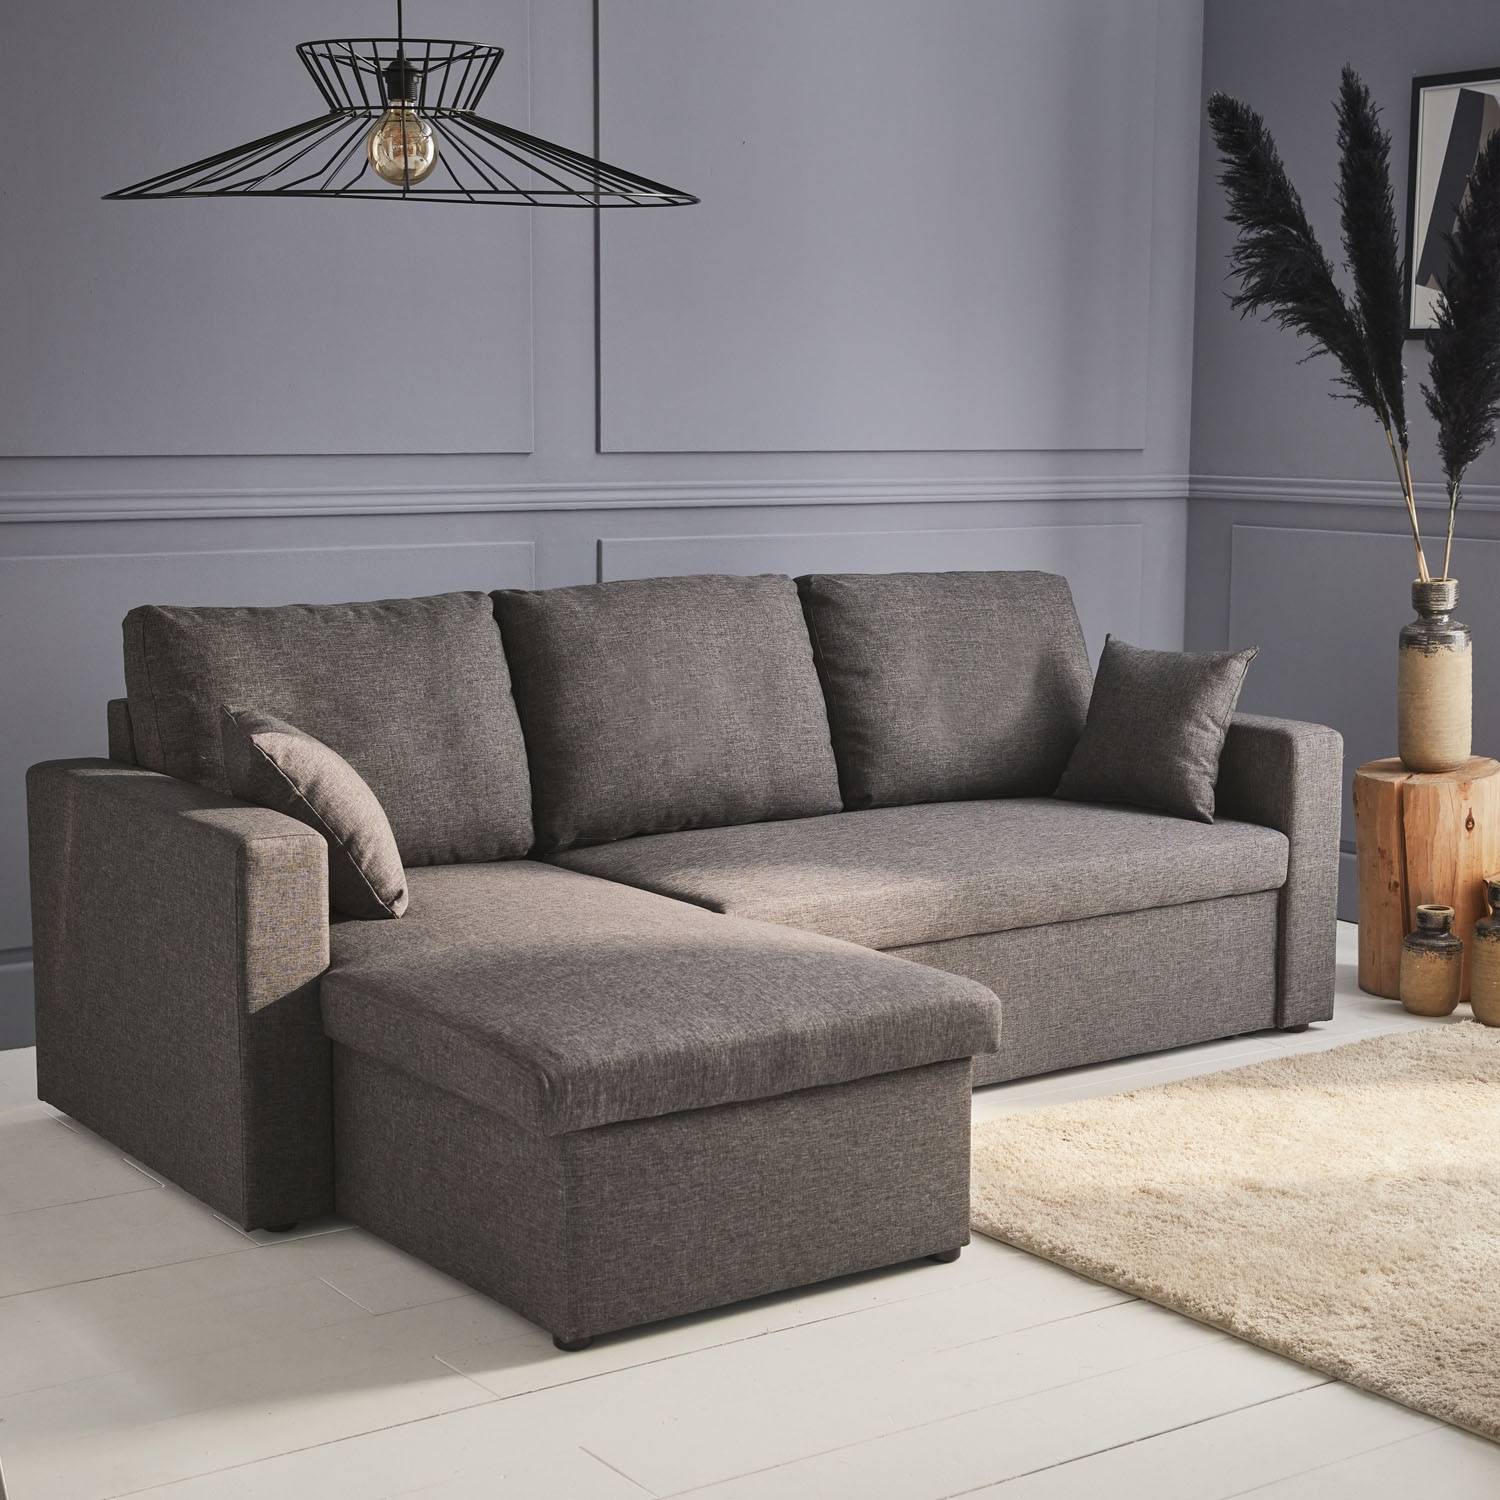 3-seater grey reversible corner sofa bed with storage box | sweeek